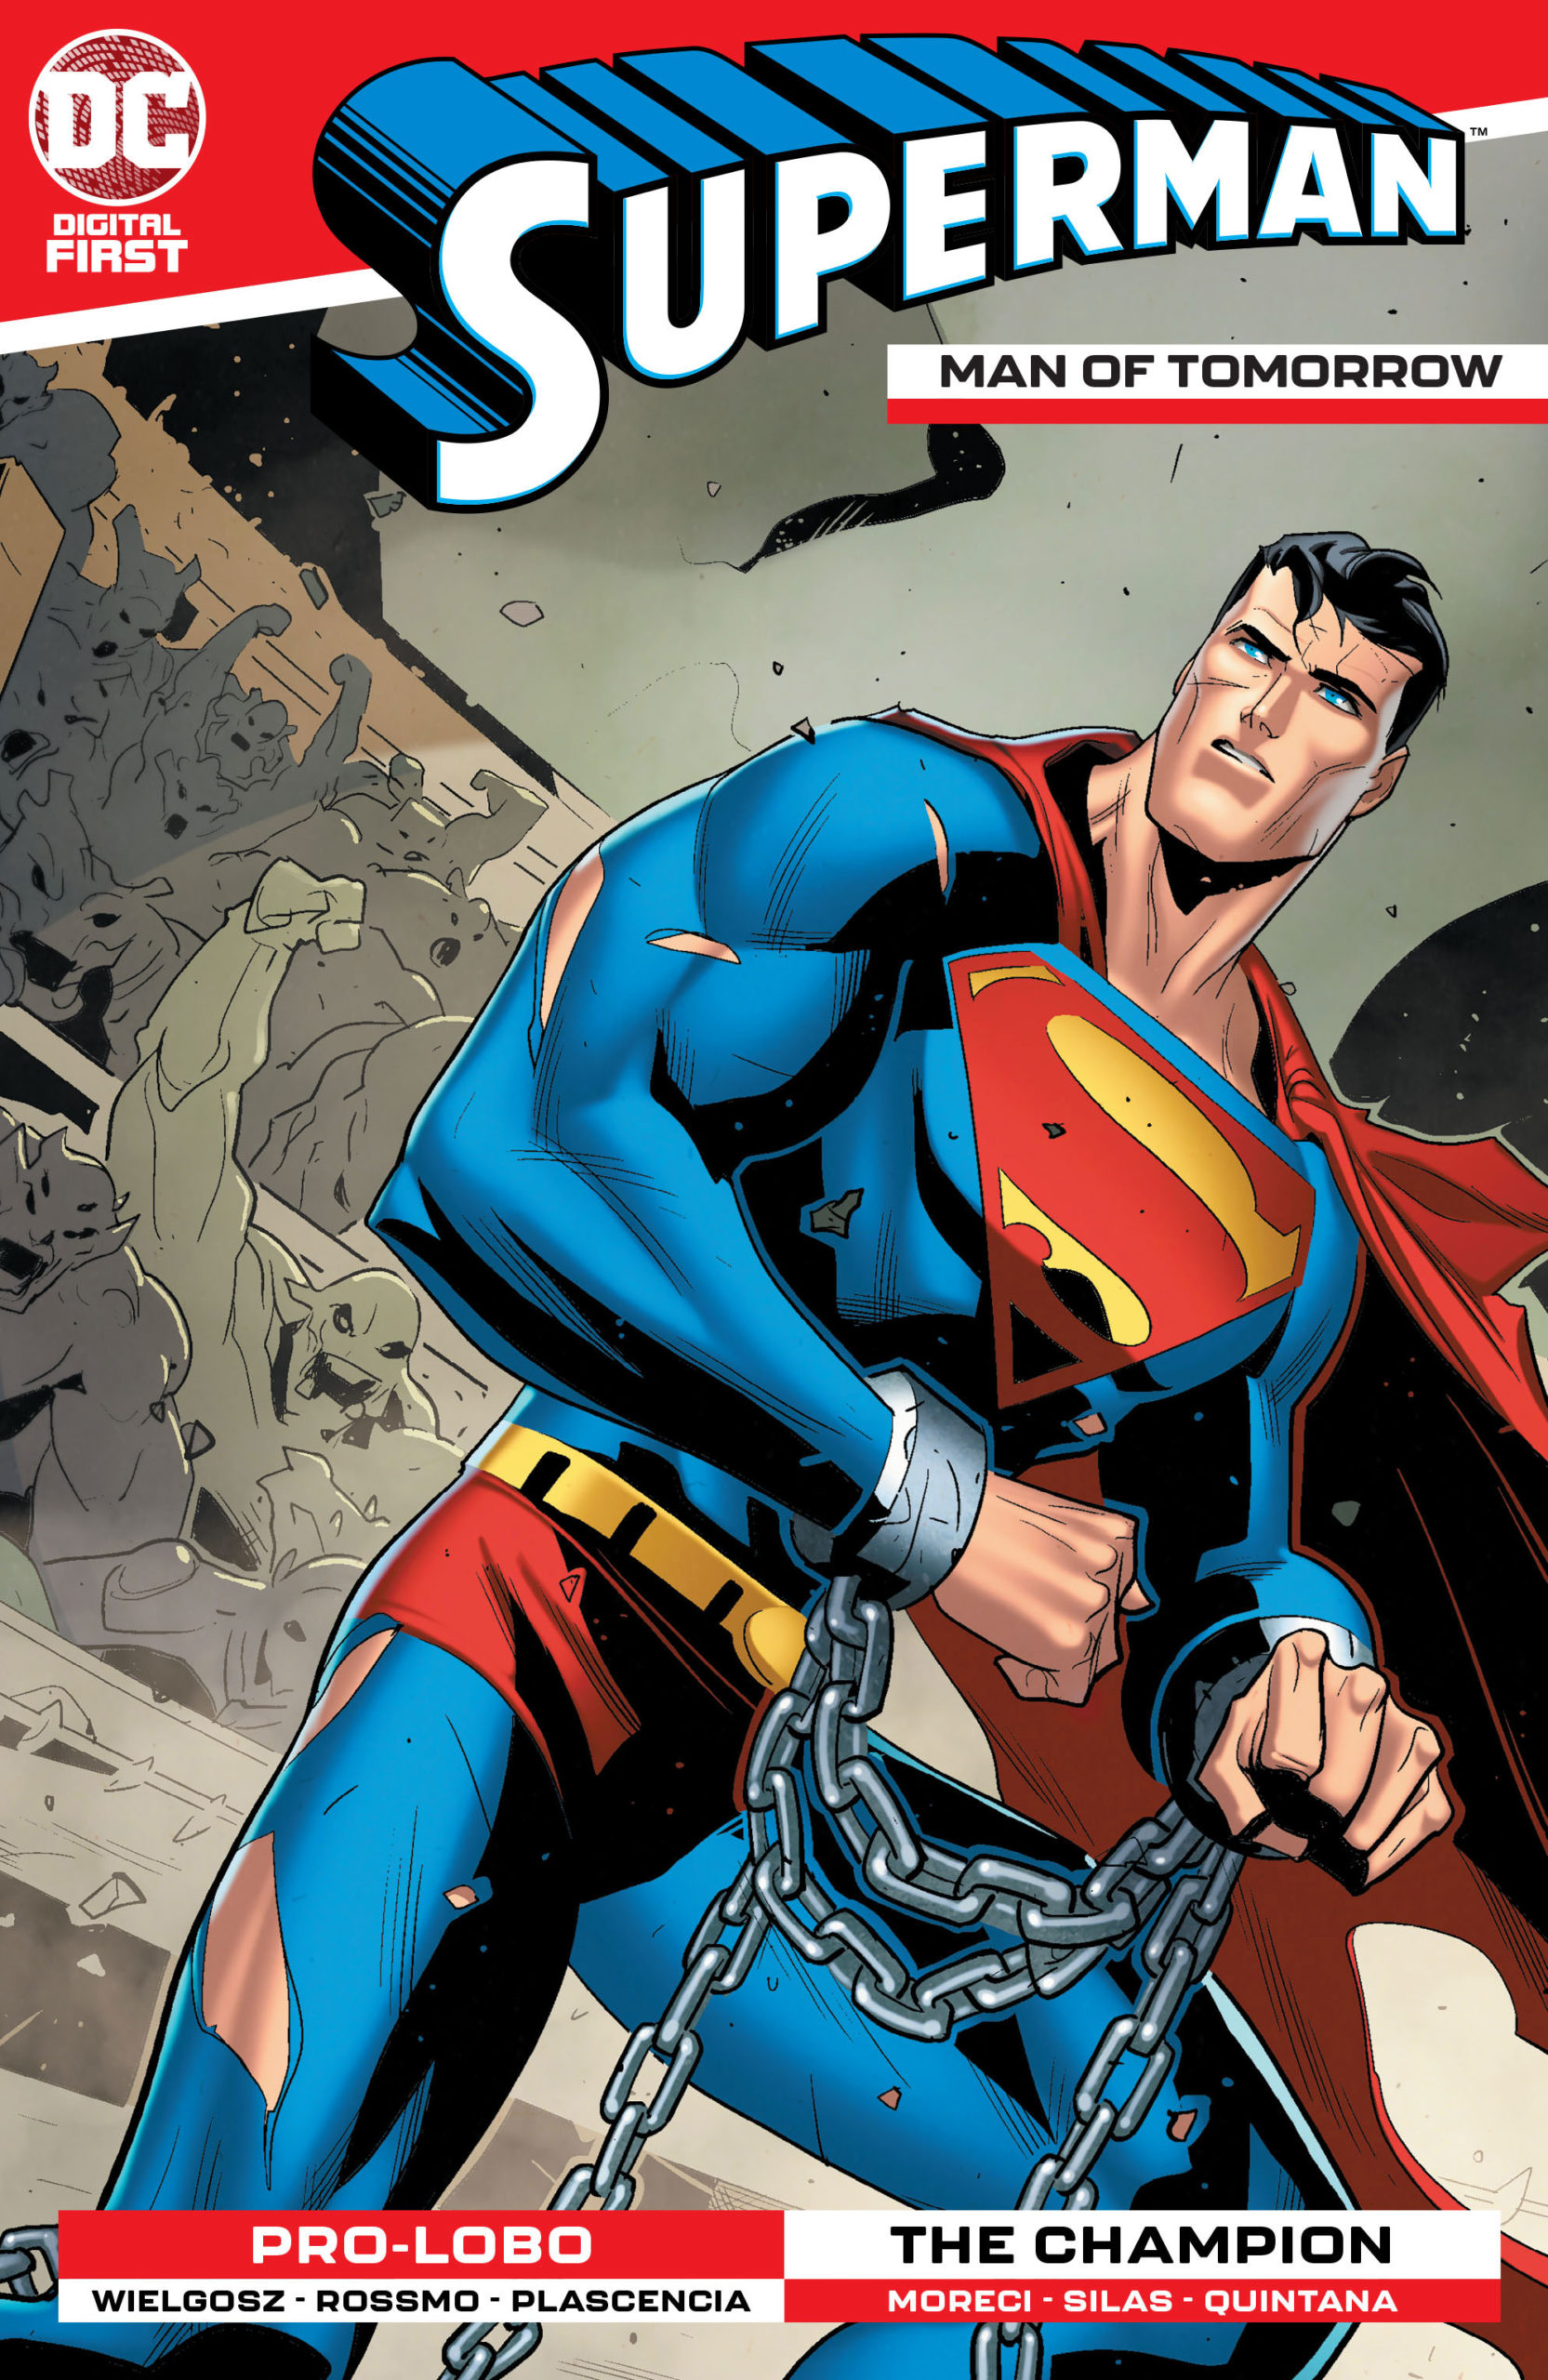 SUPERMAN-THE-MAN-OF-TOMORROW-Cv10